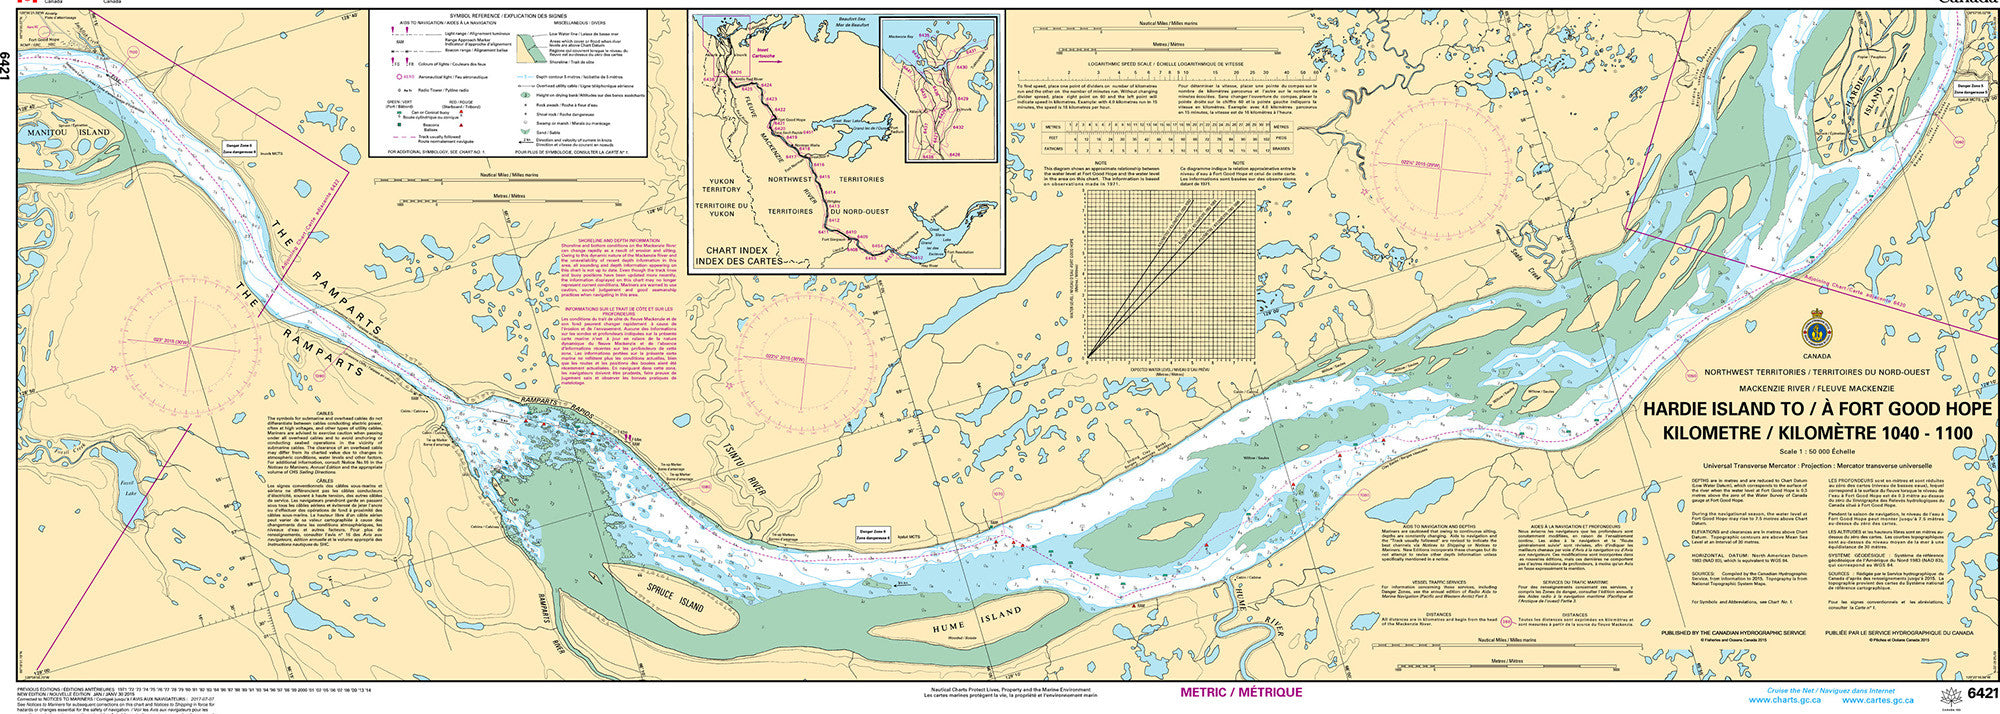 Canadian Hydrographic Service Nautical Chart CHS6421: Hardie Island to/à Fort Good Hope Kilometre 1040 / Kilometre 1100